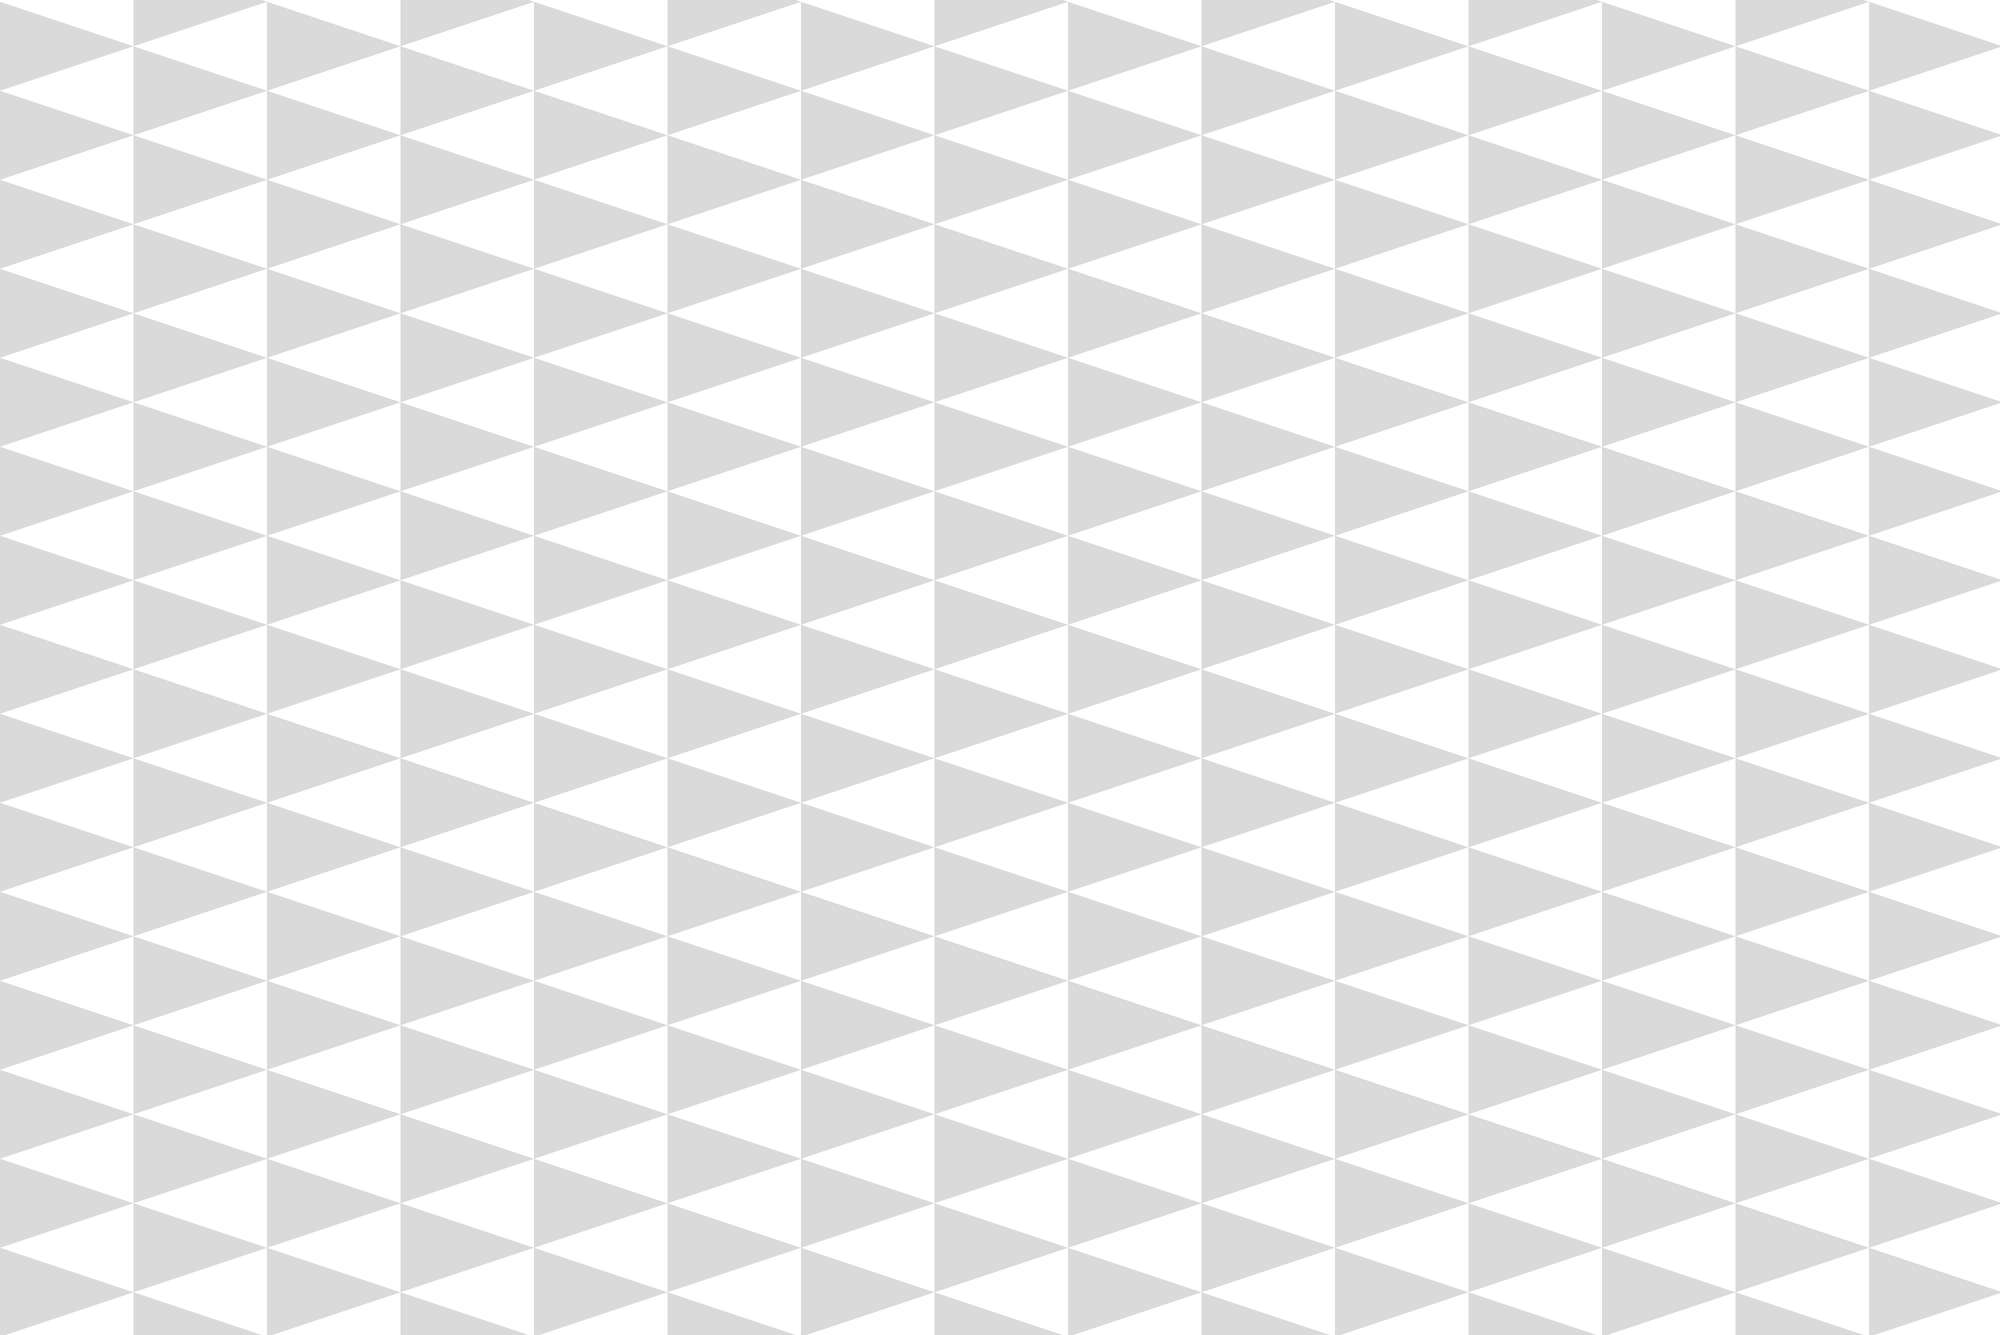             Carta da parati design piccoli triangoli grigi su pile liscio premium
        